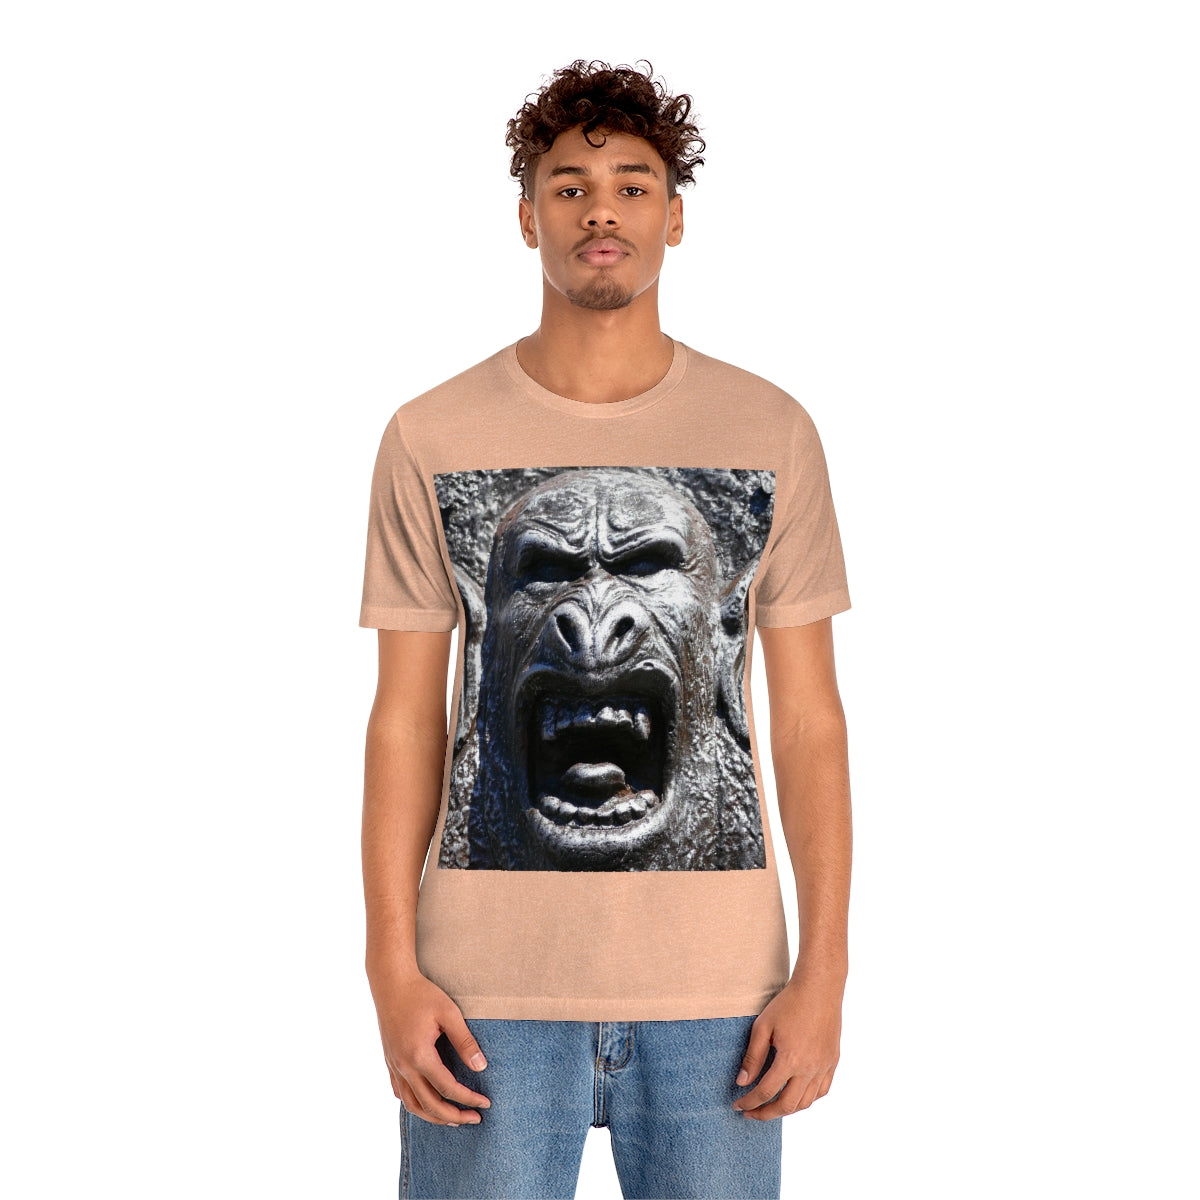 Frenzy Scream - Unisex Jersey Short Sleeve T-Shirt - Fry1Productions